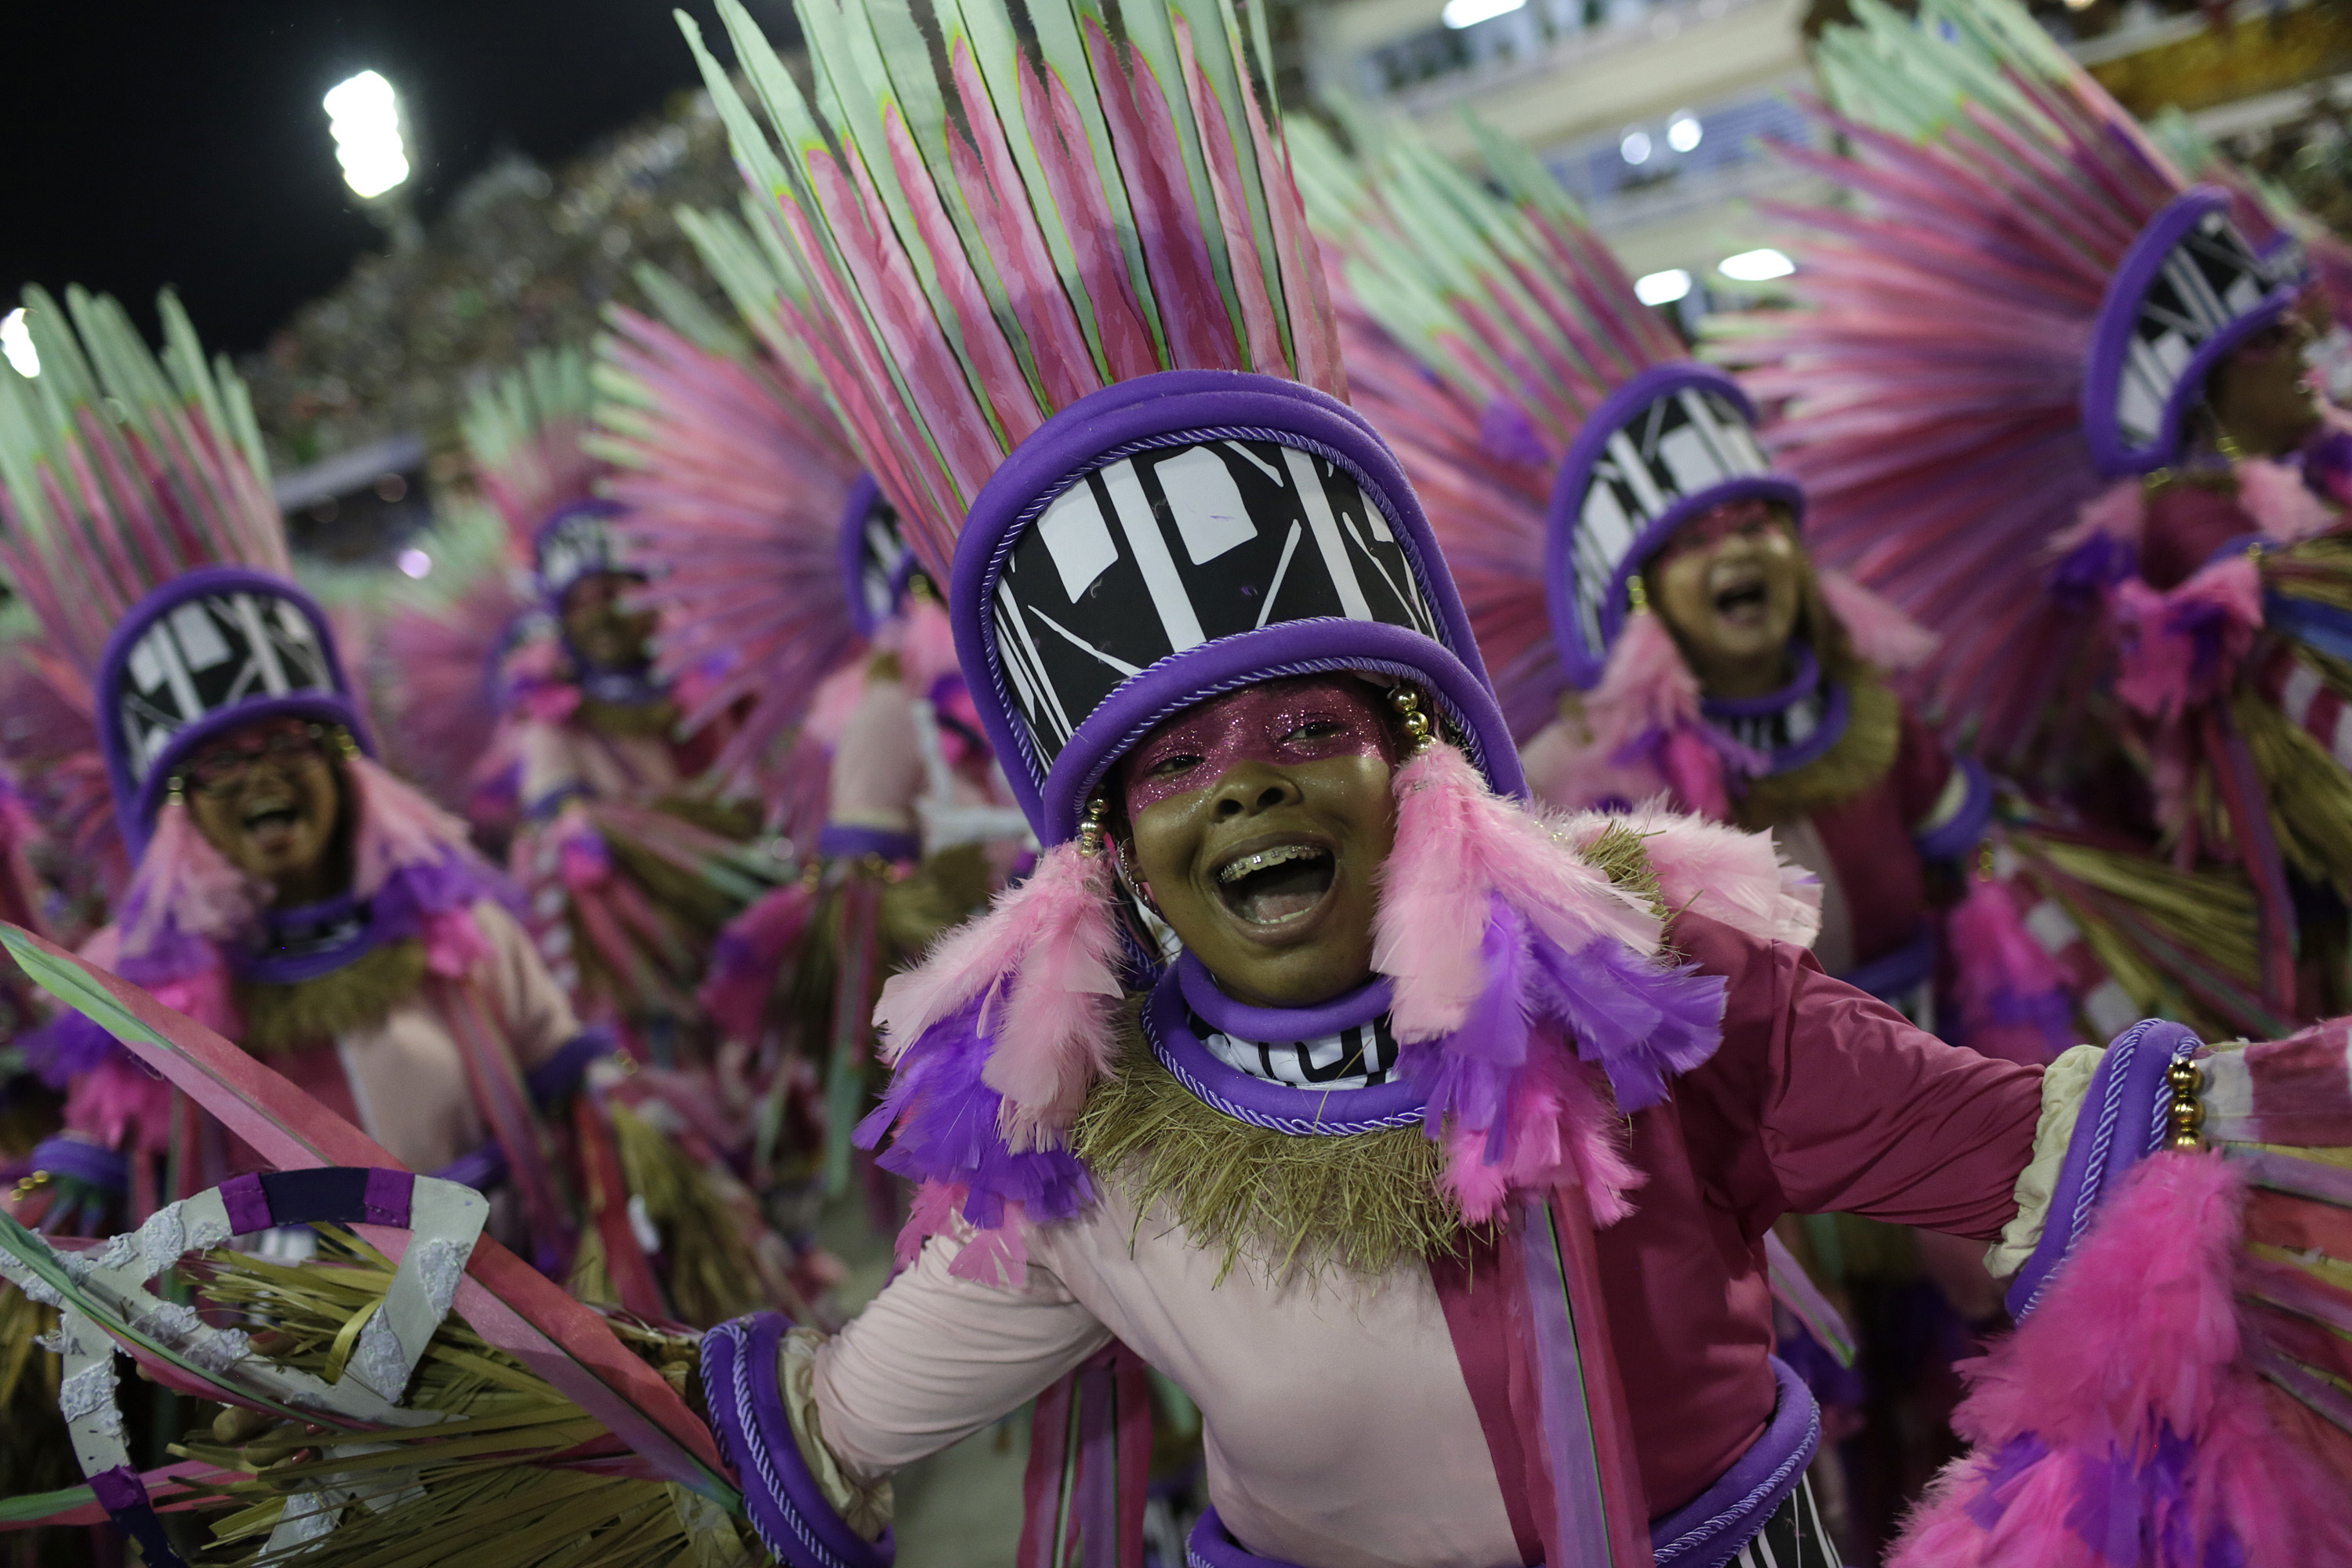 Performers from the Mangueira samba school parade during Carnival celebrations at the Sambadrome in Rio de Janeiro, Brazil, Tuesday, March 5, 2019. (AP Photo/Silvia Izquierdo)